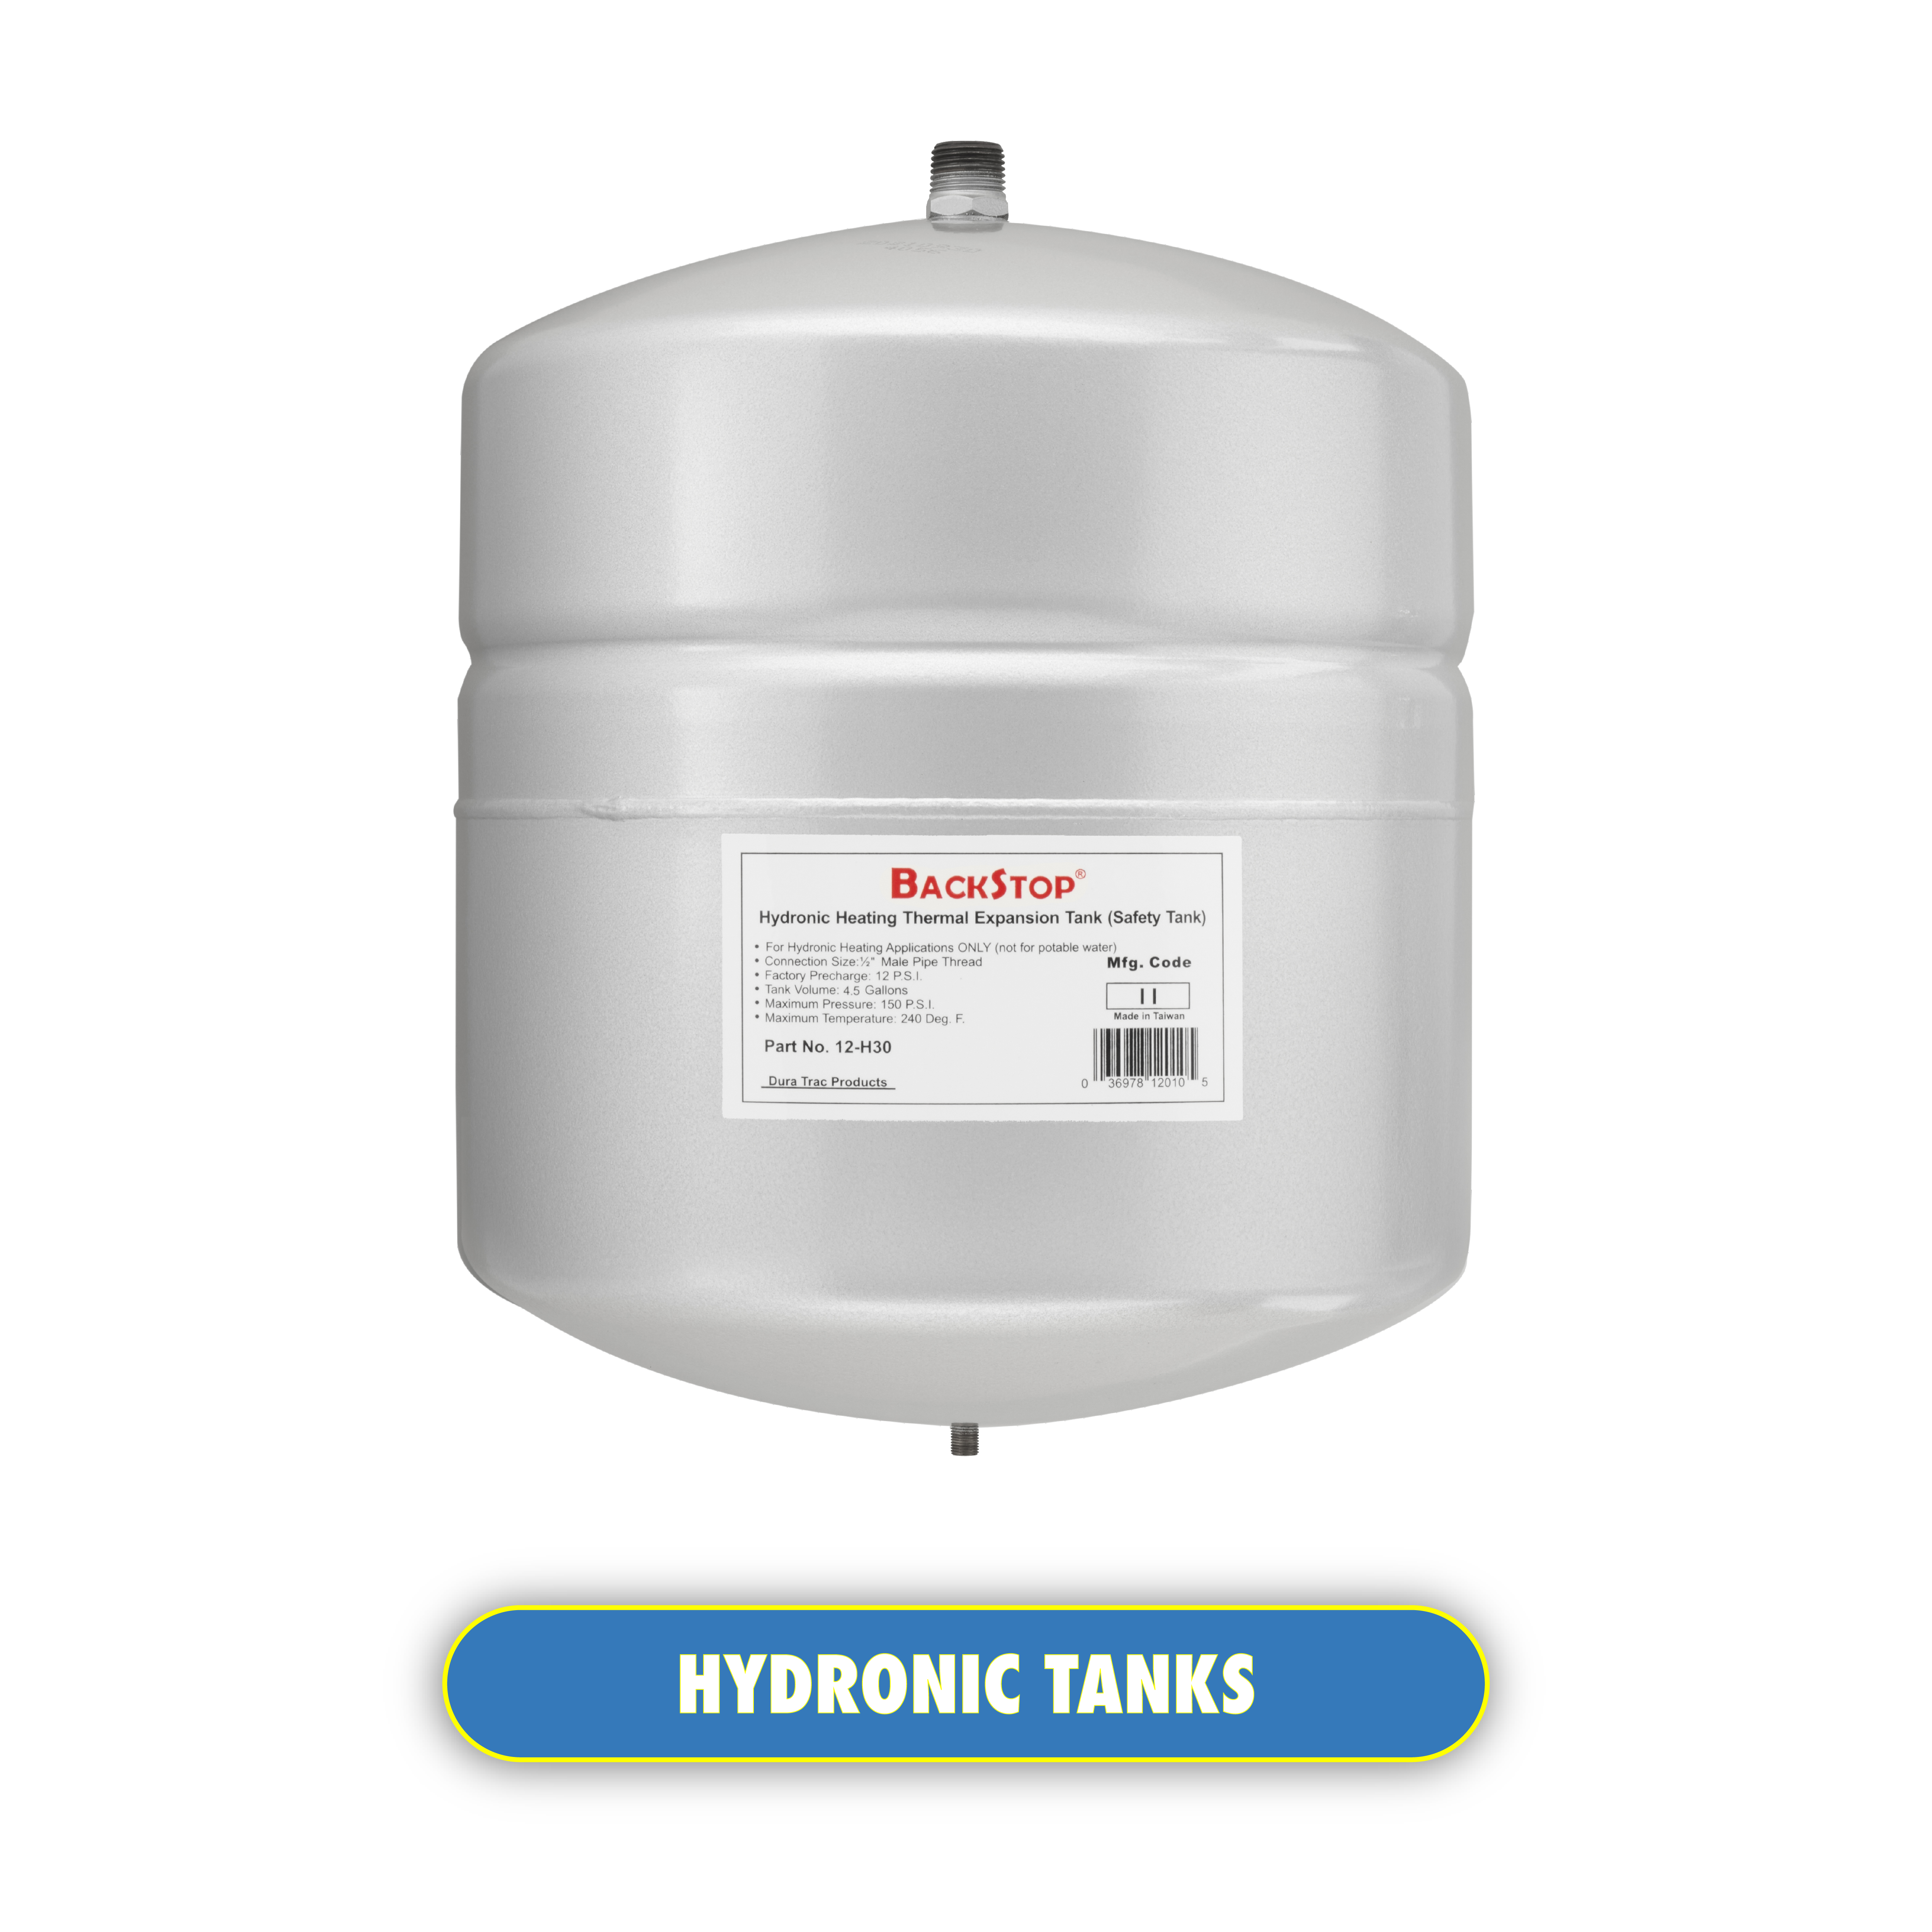 Hydronic tanks